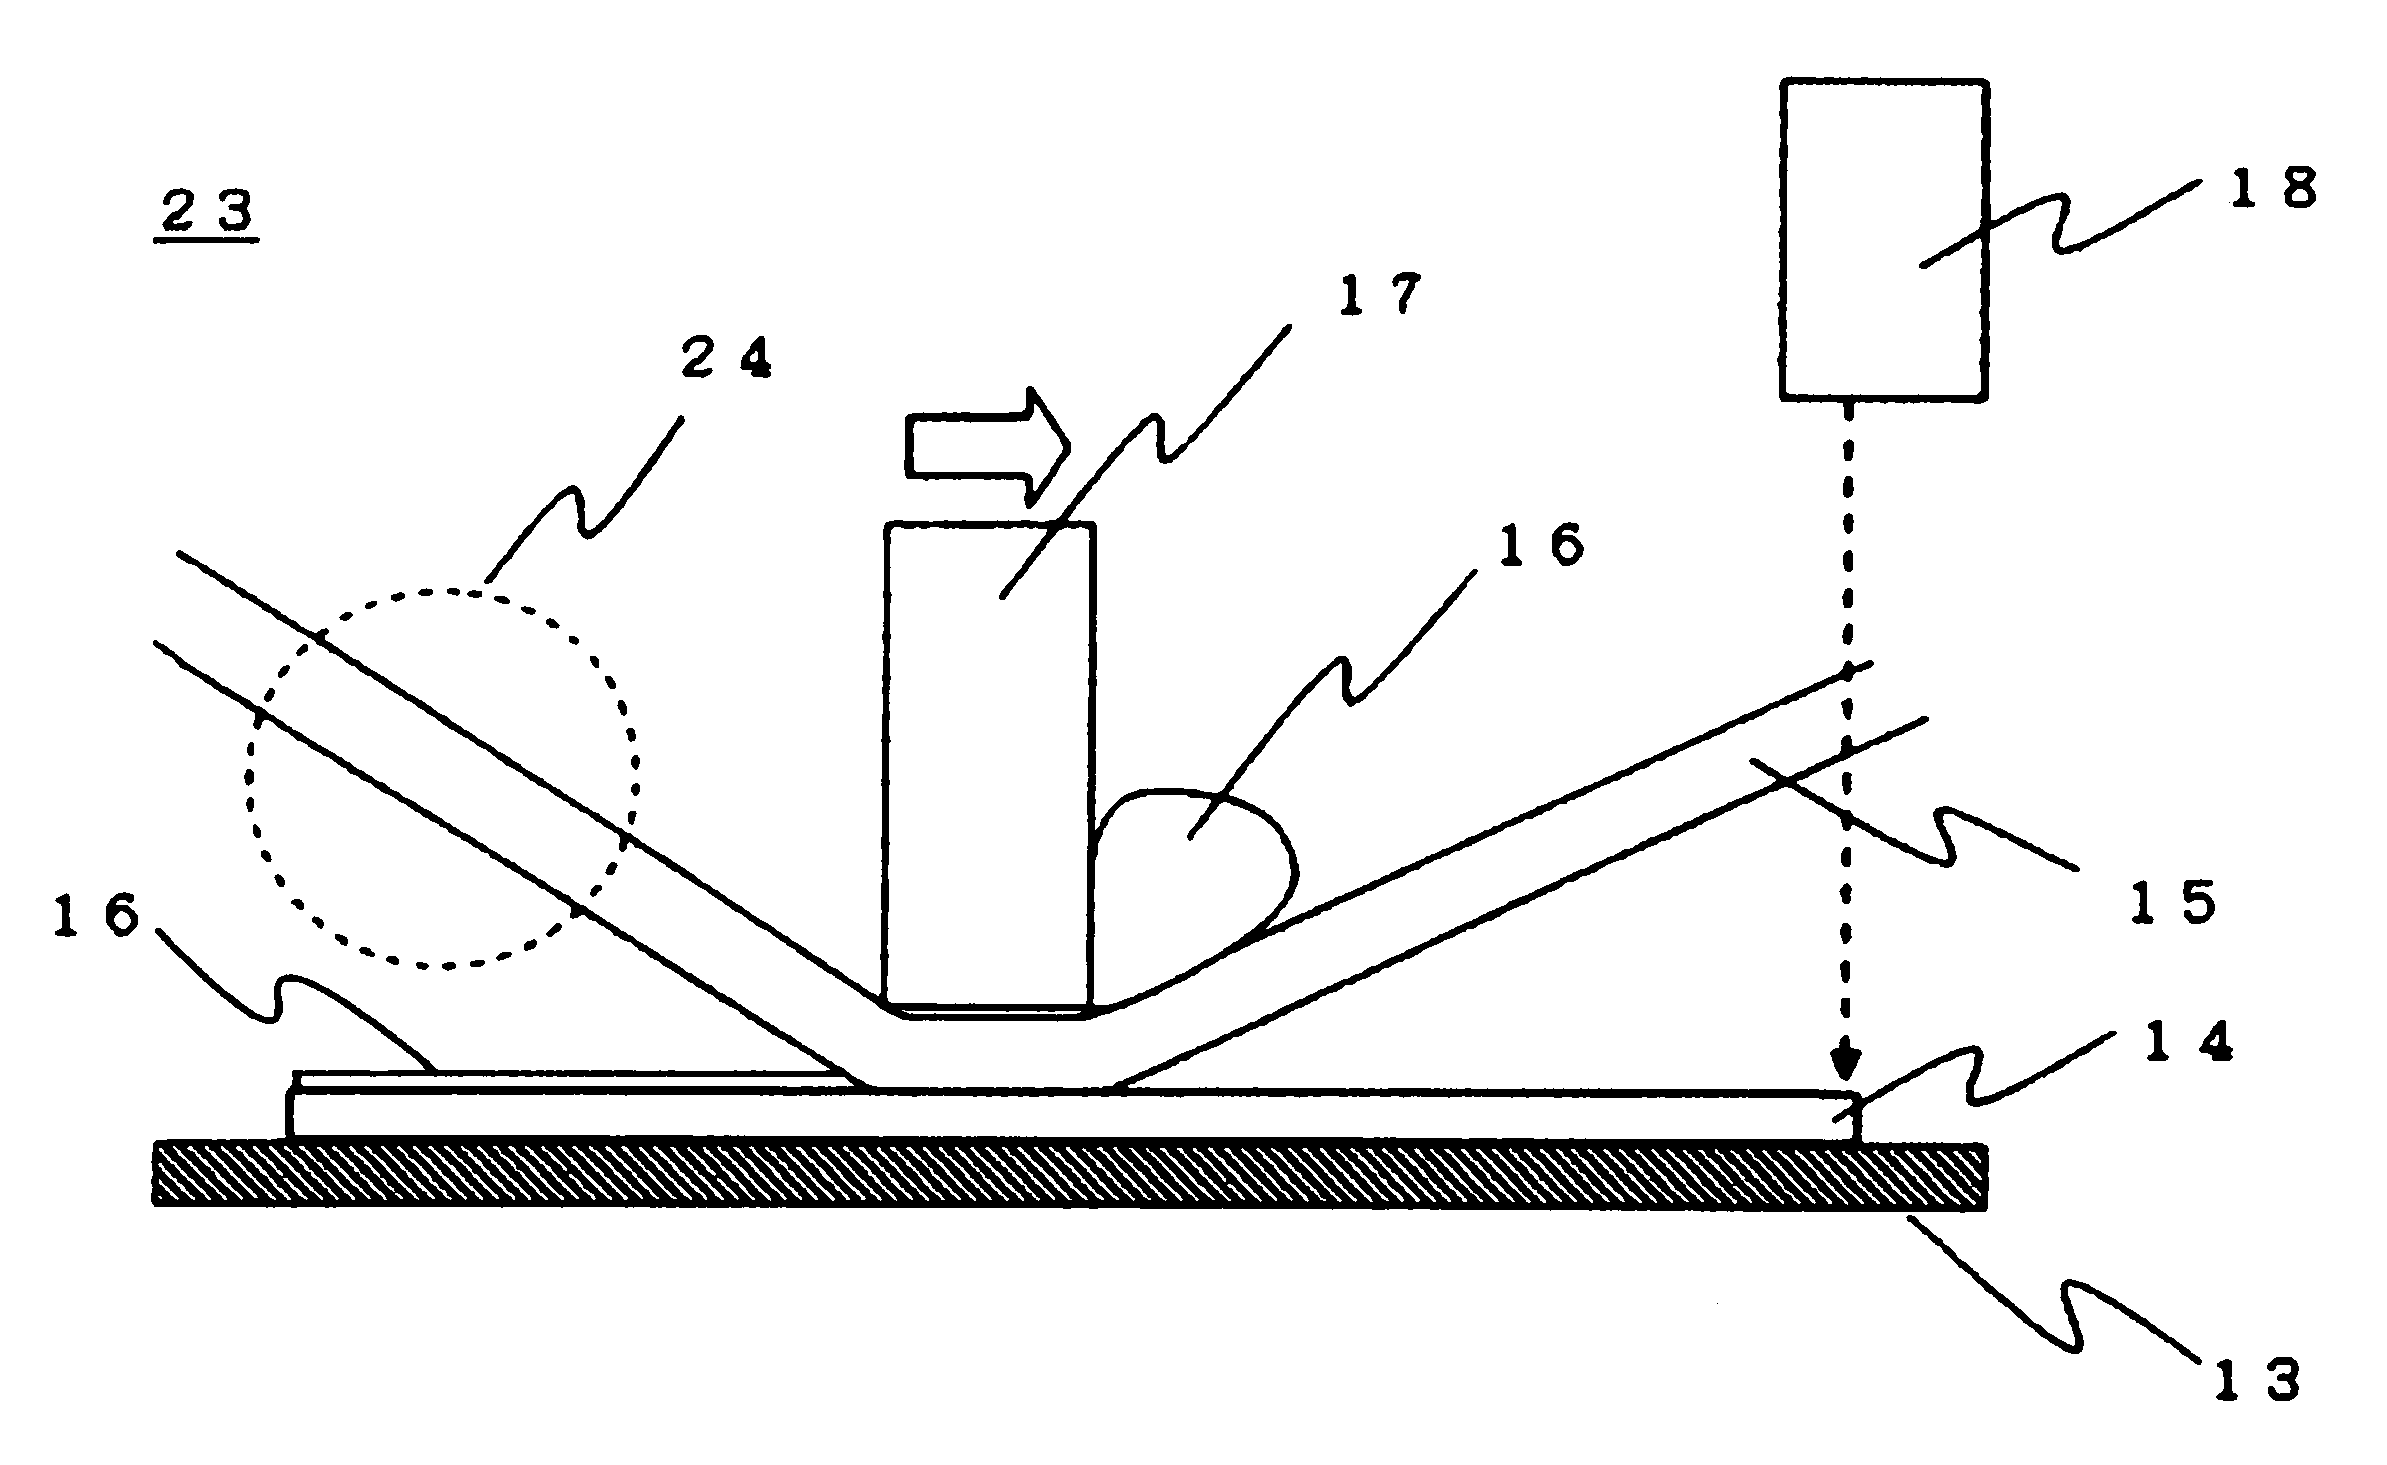 Method of manufacturing liquid crystal panel